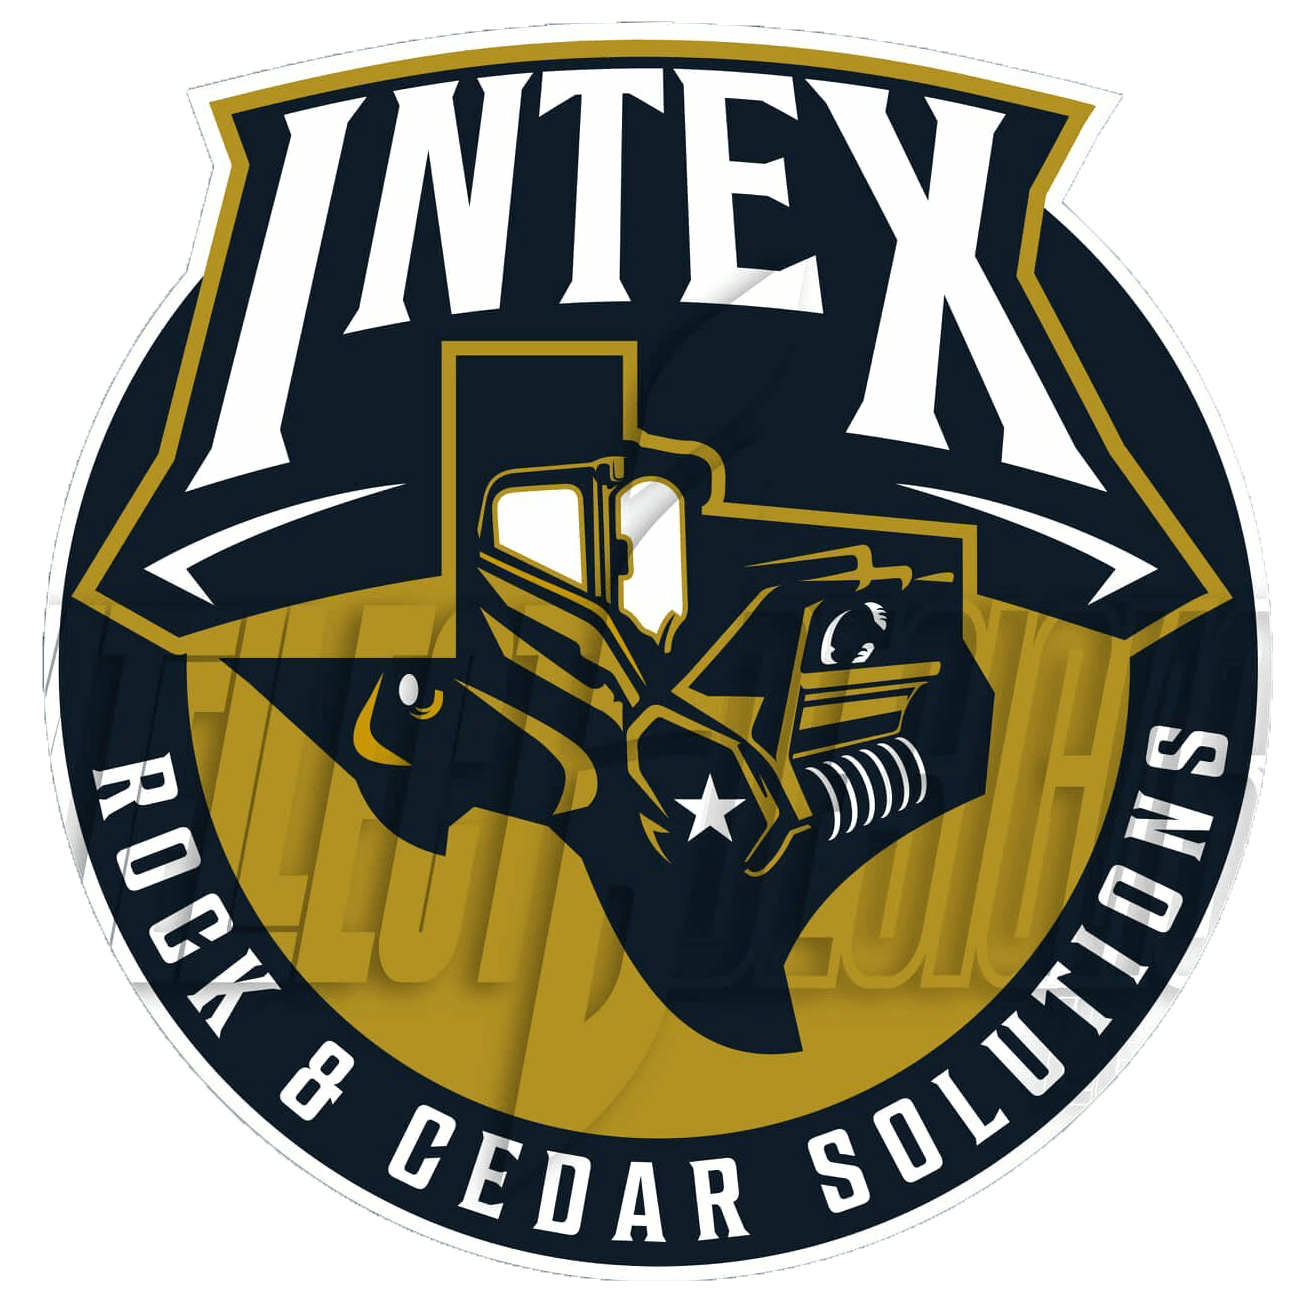 Intex Rock & Cedar Solutions